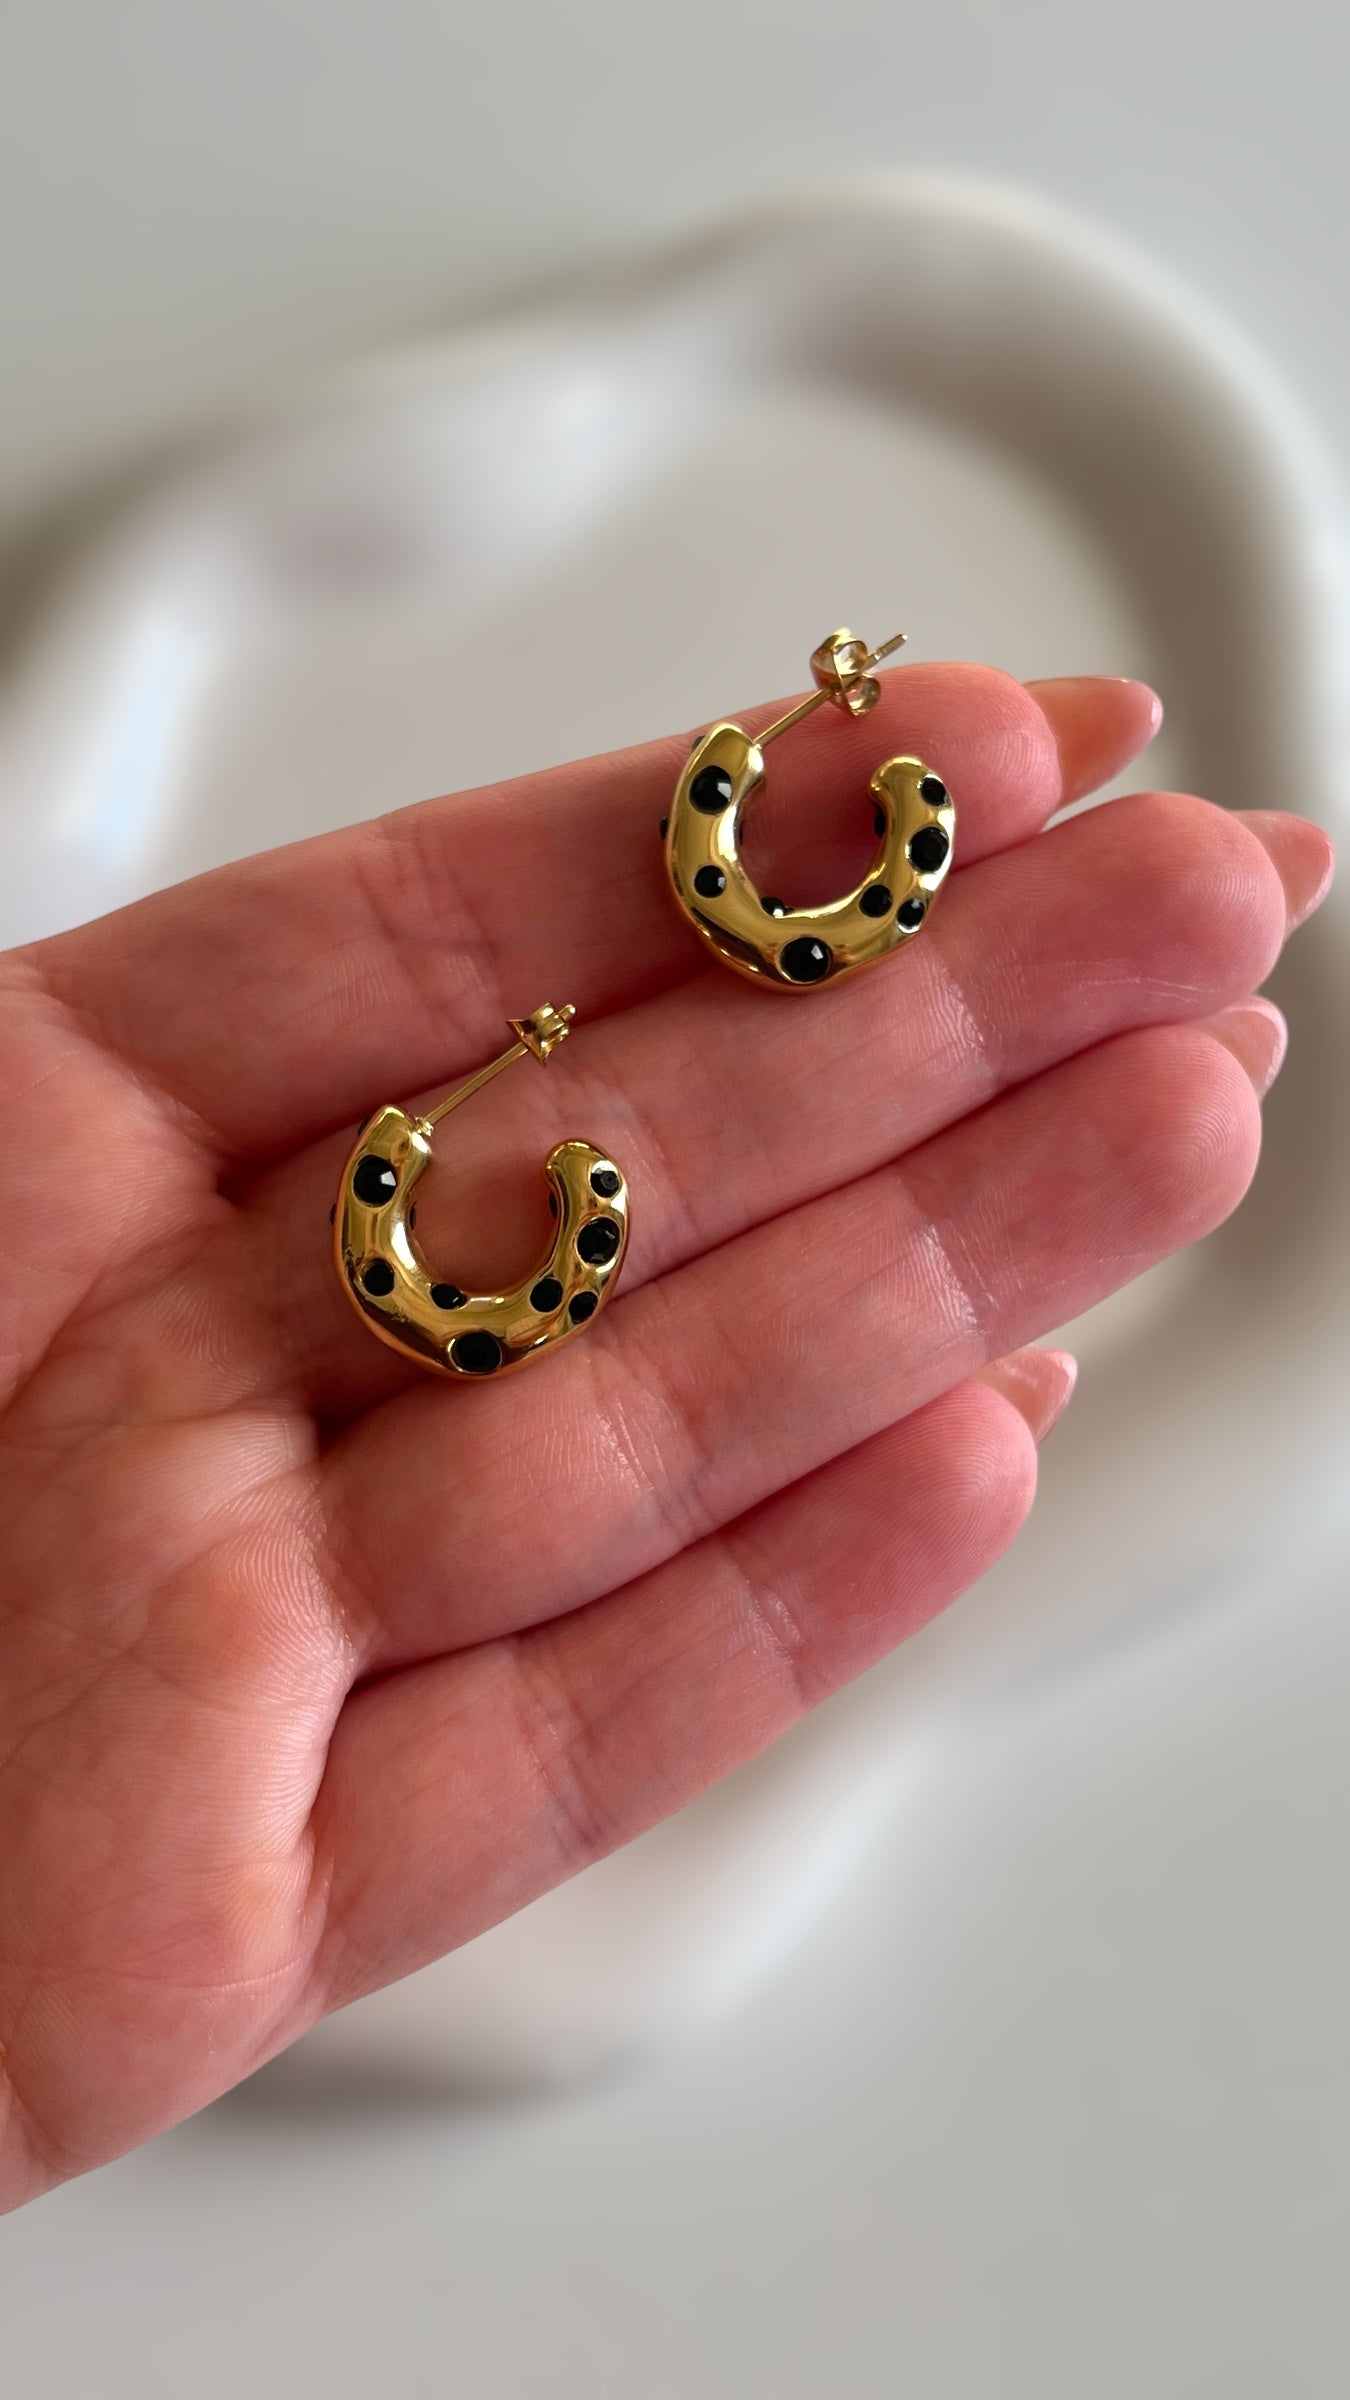 14K Gold Filled Stainless Steel Huggie Hoops Earrings with Zircon Inlay